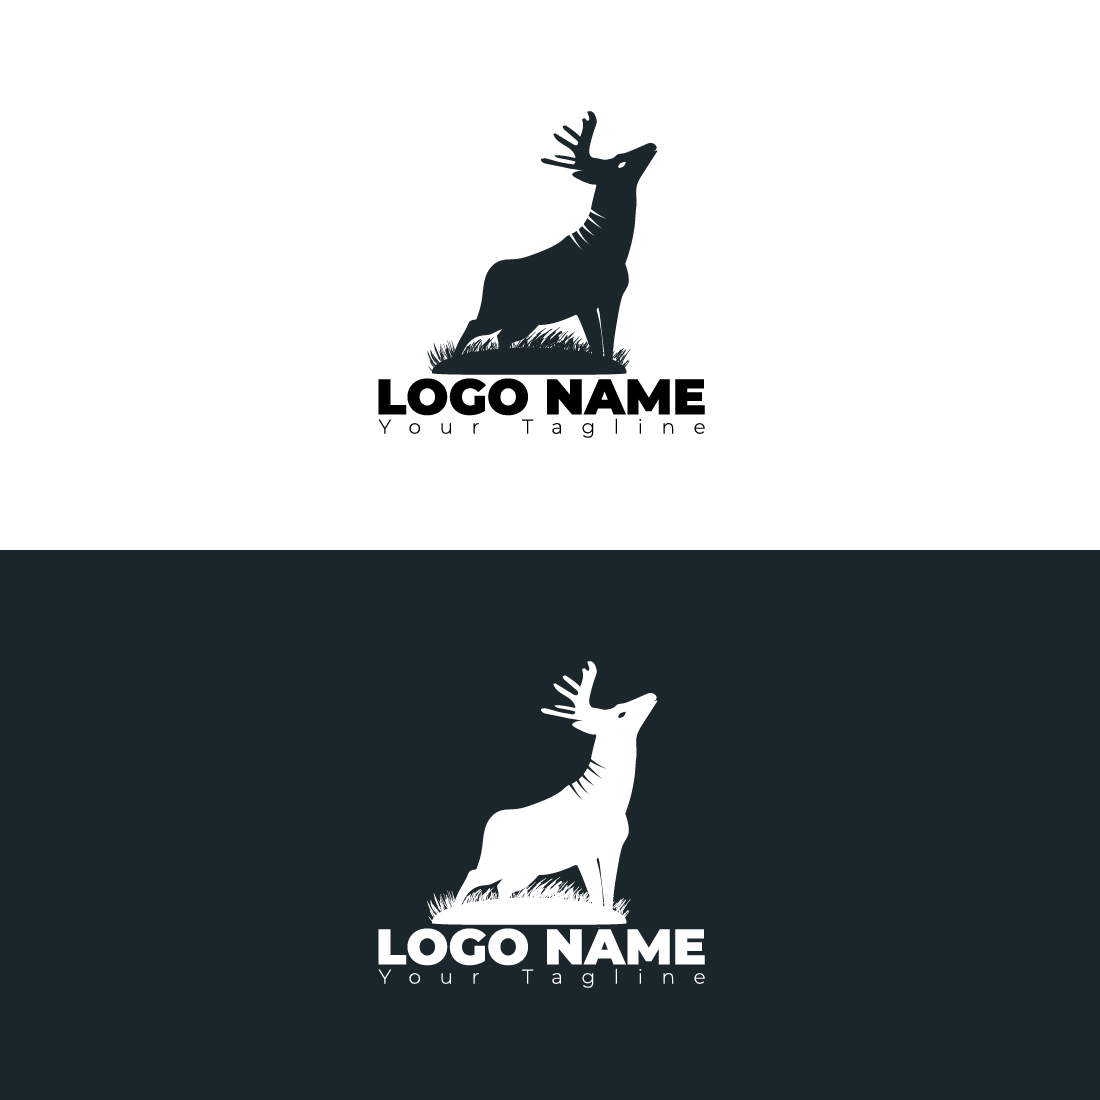 Logo Deer Template cover image.